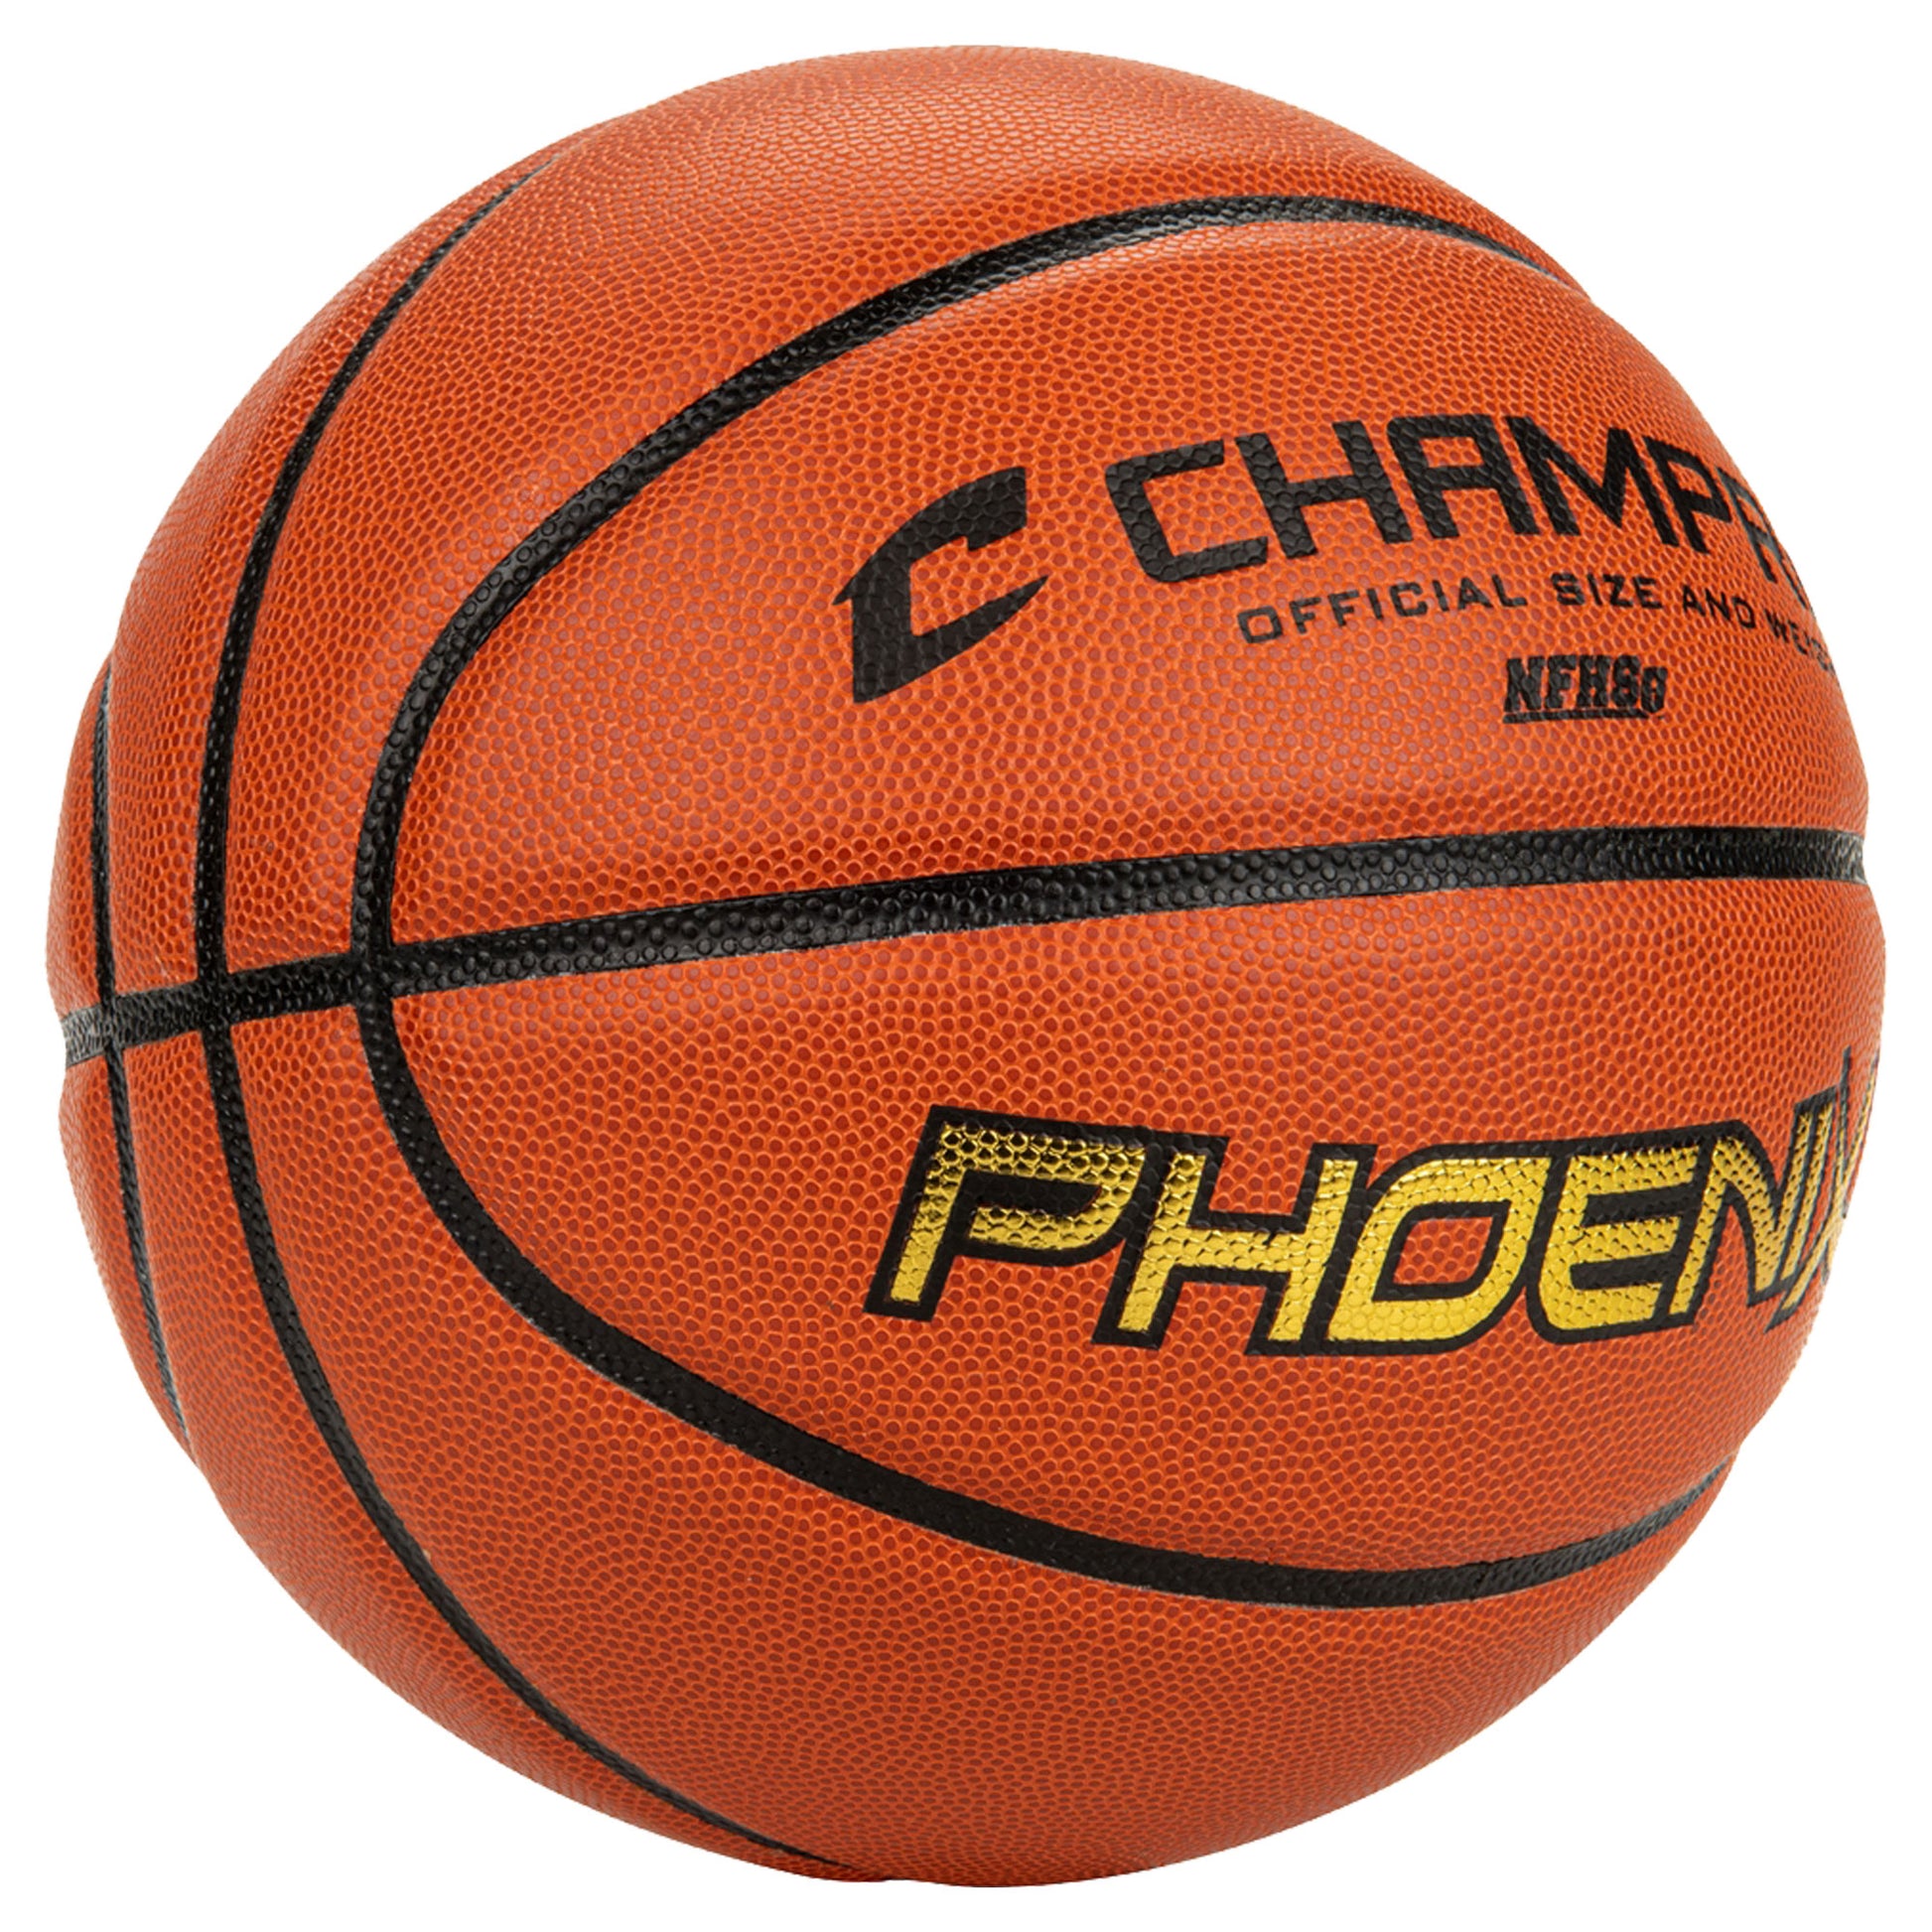 Champro Sports Phoenix Microfiber Indoor Basketball Front Prifle